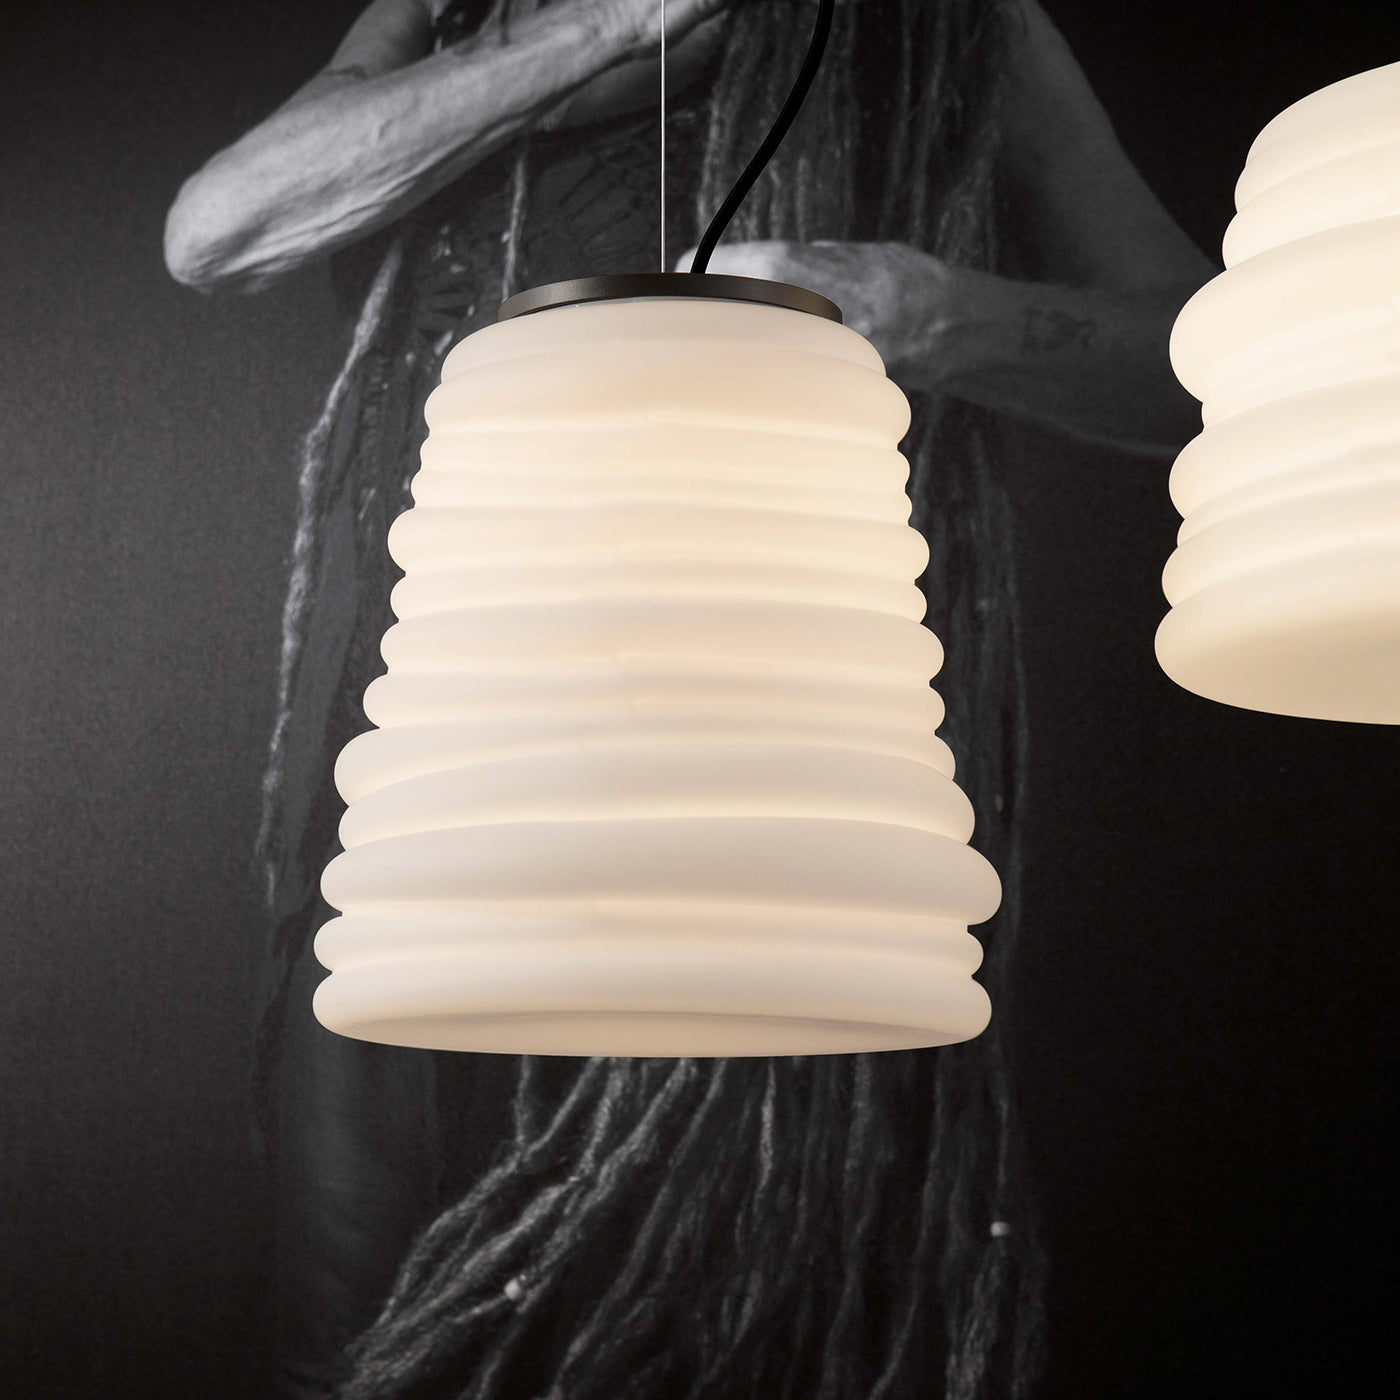 Bibendum White Pendant Lamp by Paola Navone #2  - Alternative view 2